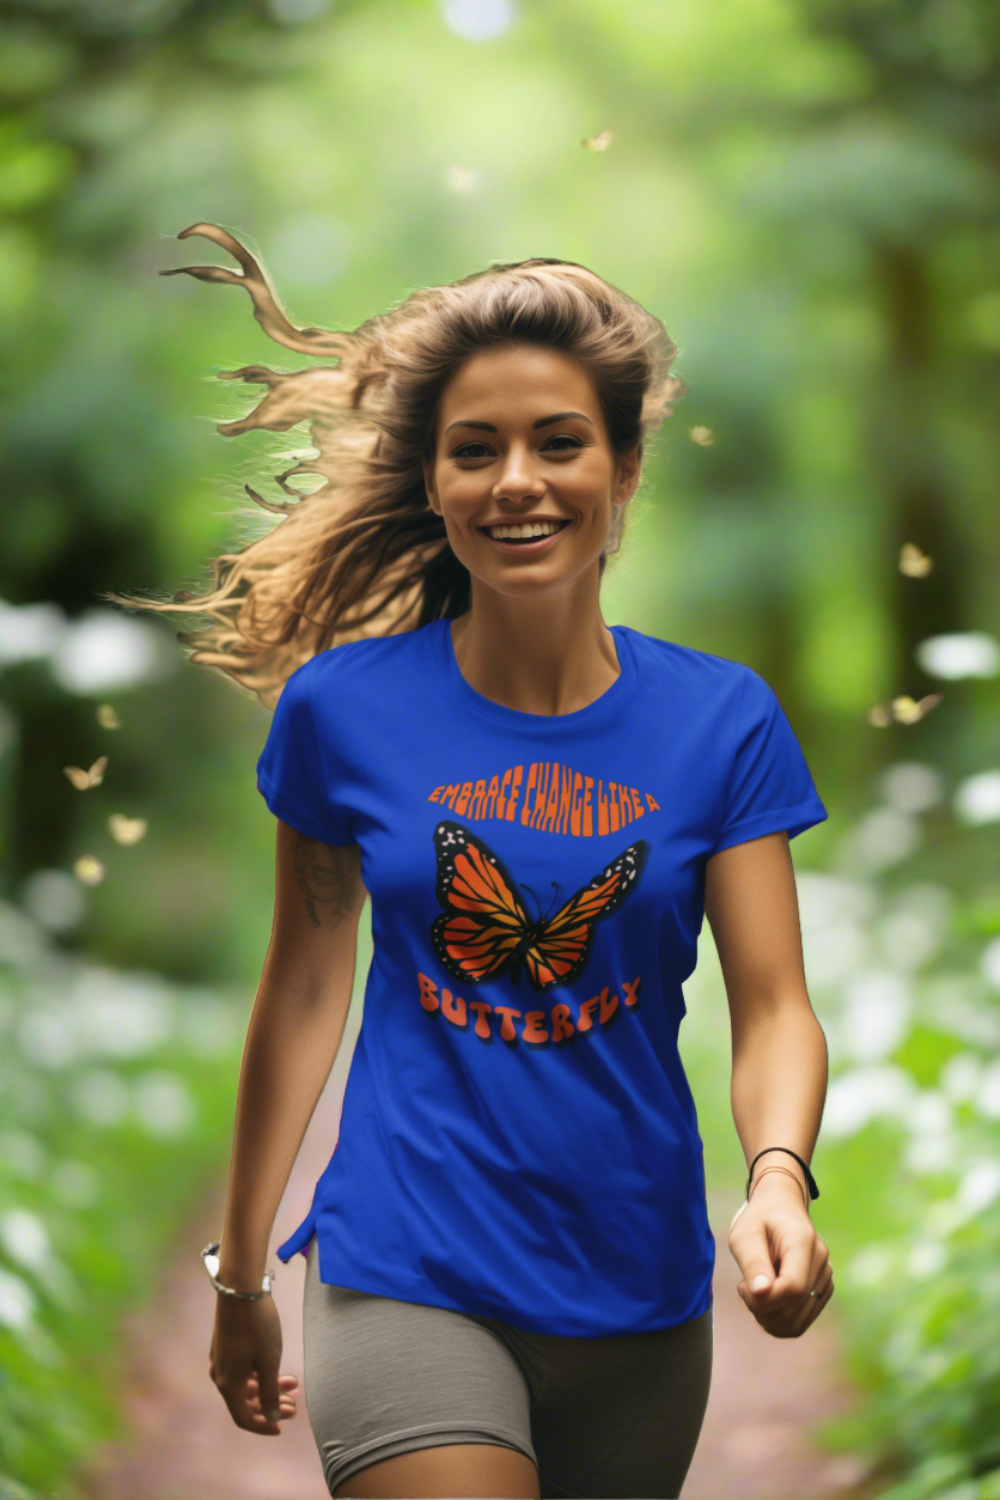 Women's Wellness T-shirt- Embrace Change, Transform Like a Butterfly